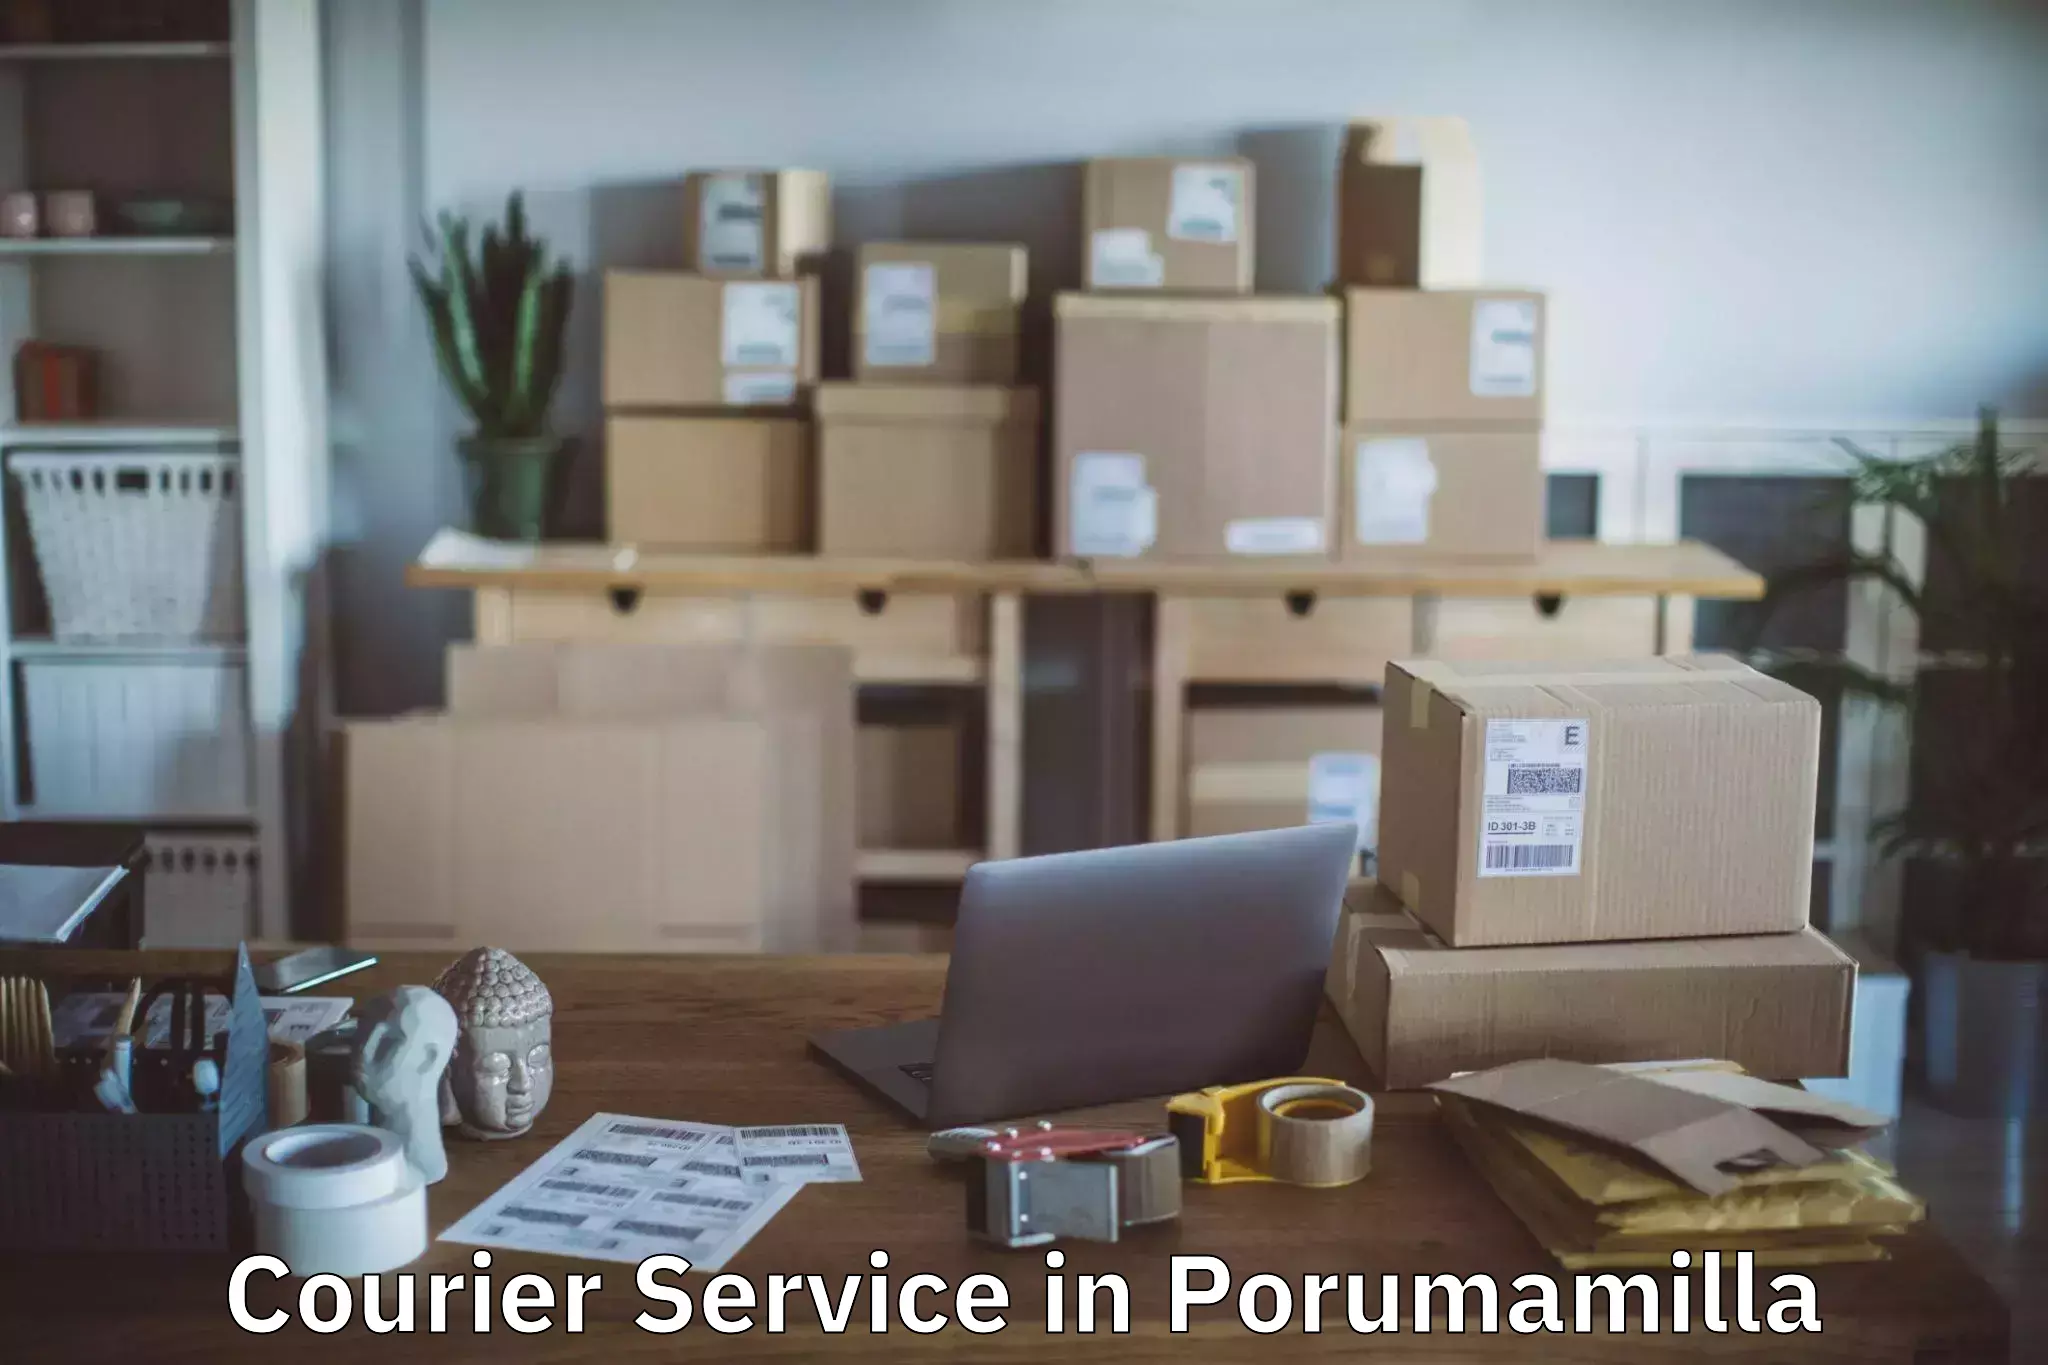 Advanced parcel tracking in Porumamilla